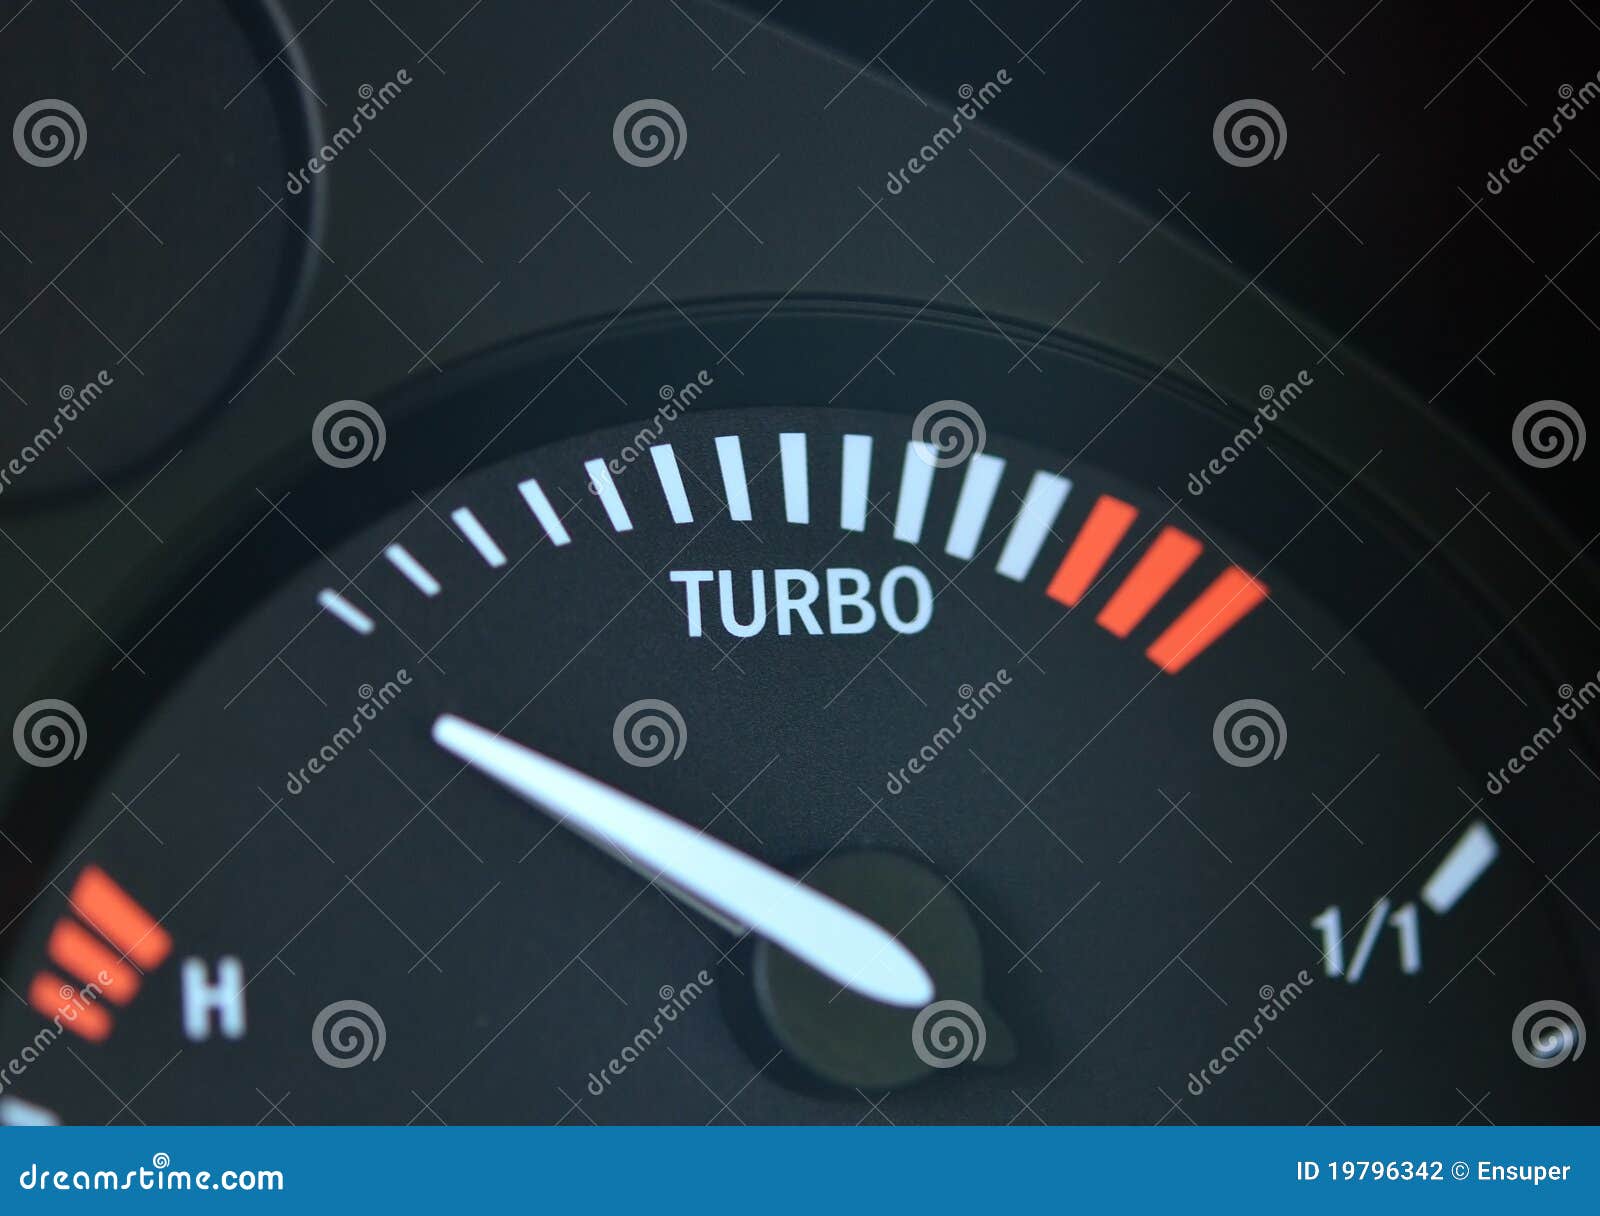 Turbo jrsx indicator